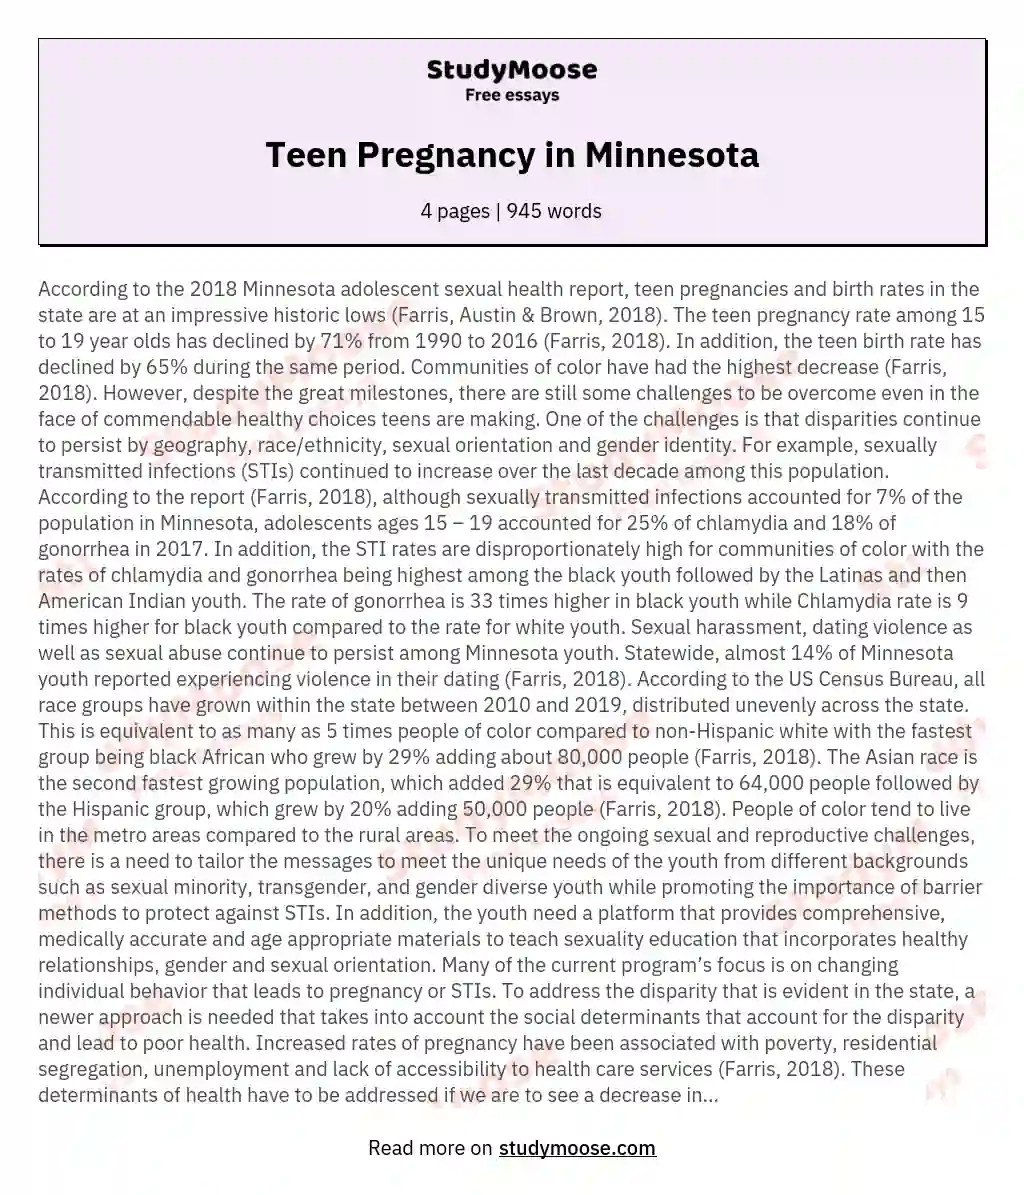 Teen Pregnancy in Minnesota essay